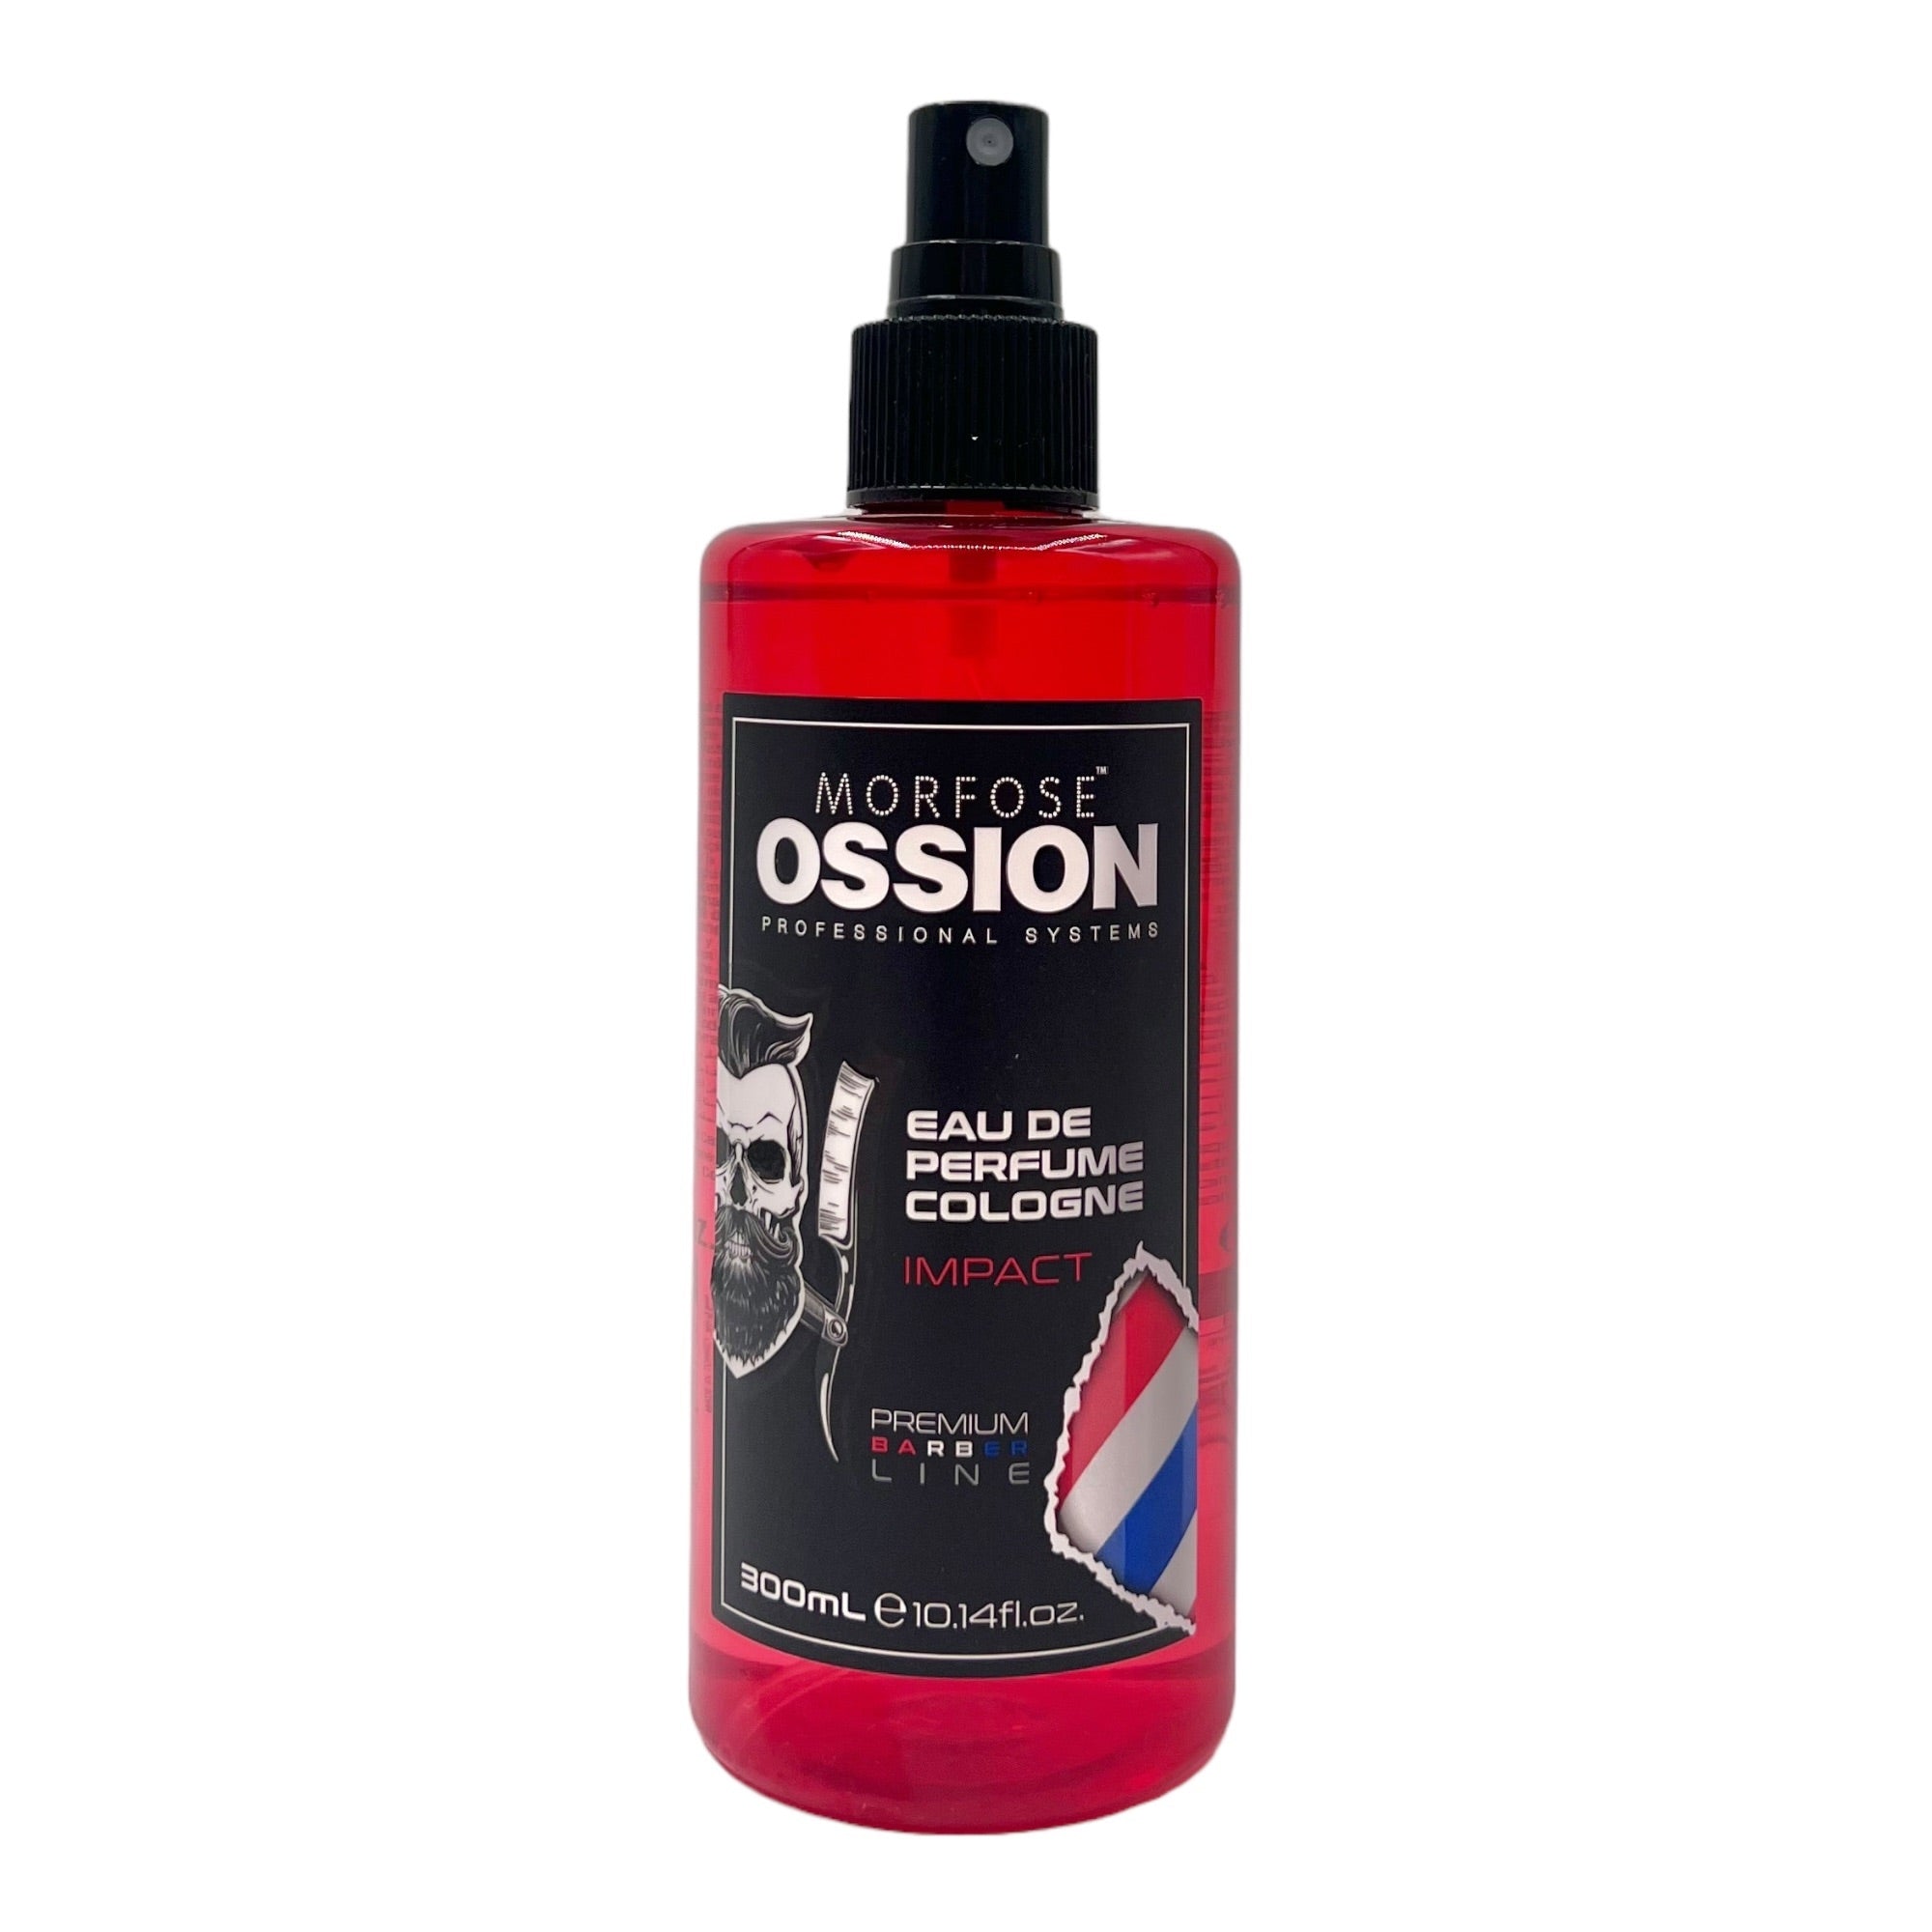 Morfose - Ossion Eau De Perfume Cologne Impact 300ml